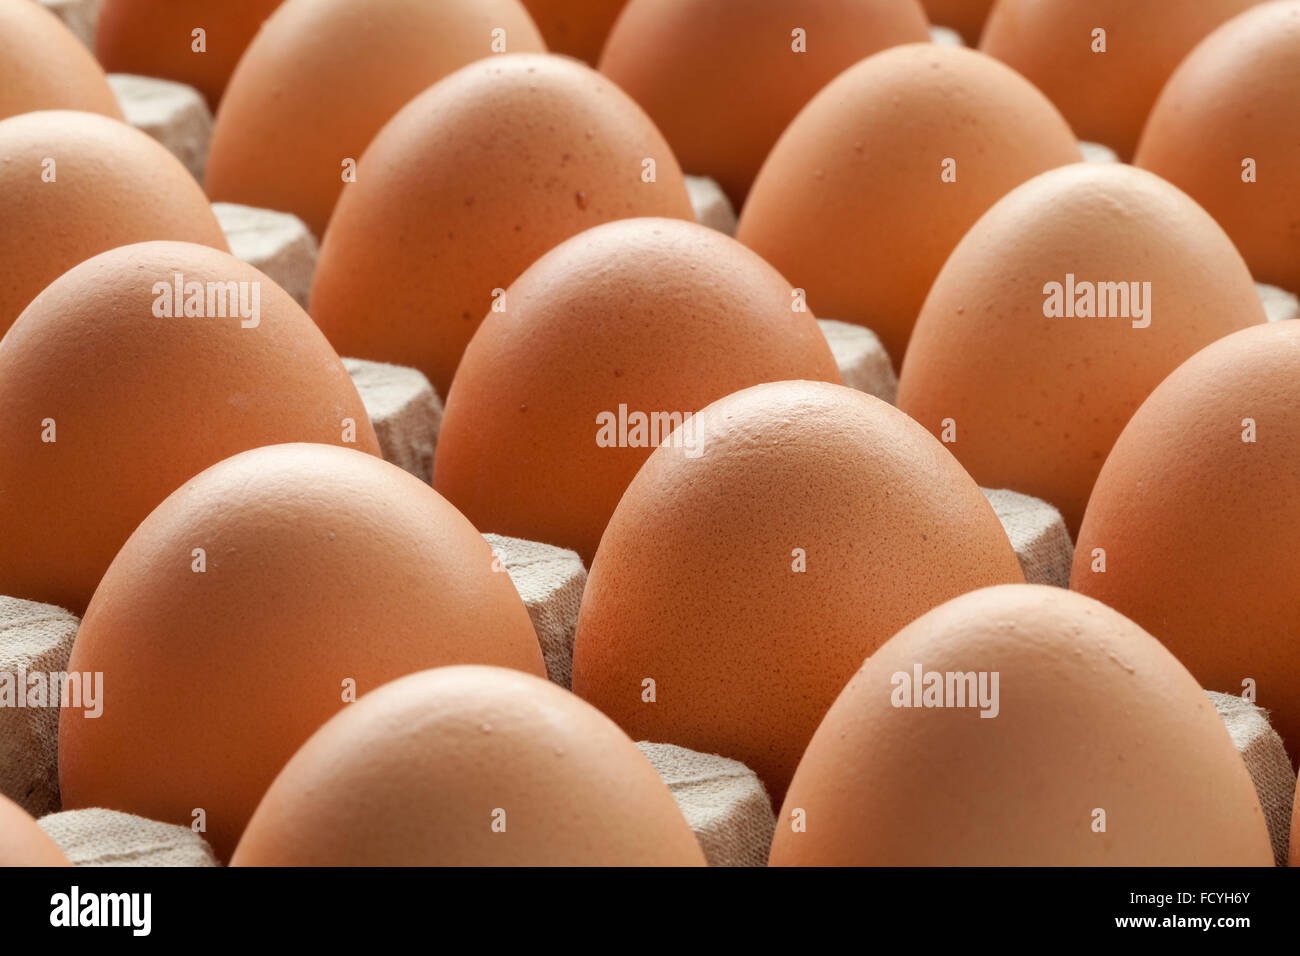 Organic fresh brown eggs in carton crate Stock Photo